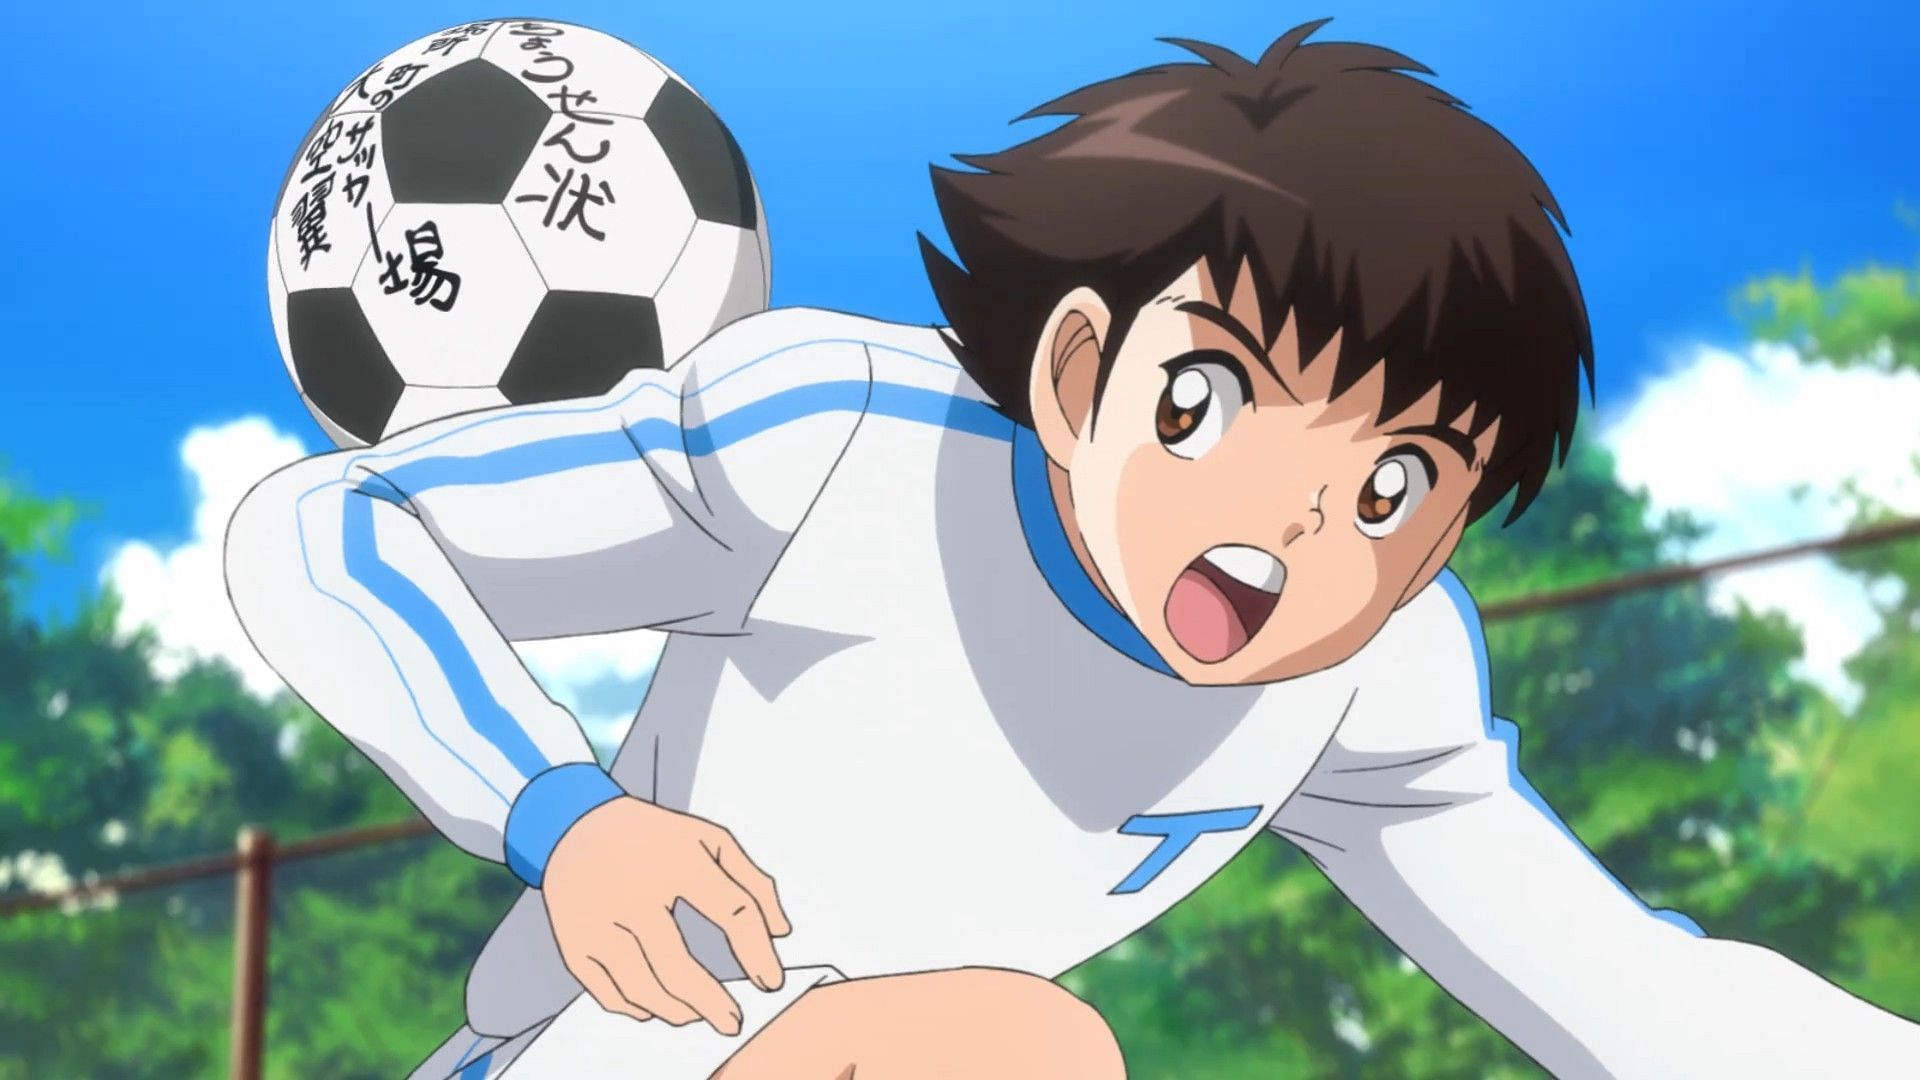 Days TV Tsukushi 3  Soccer drawing Anime Sports anime